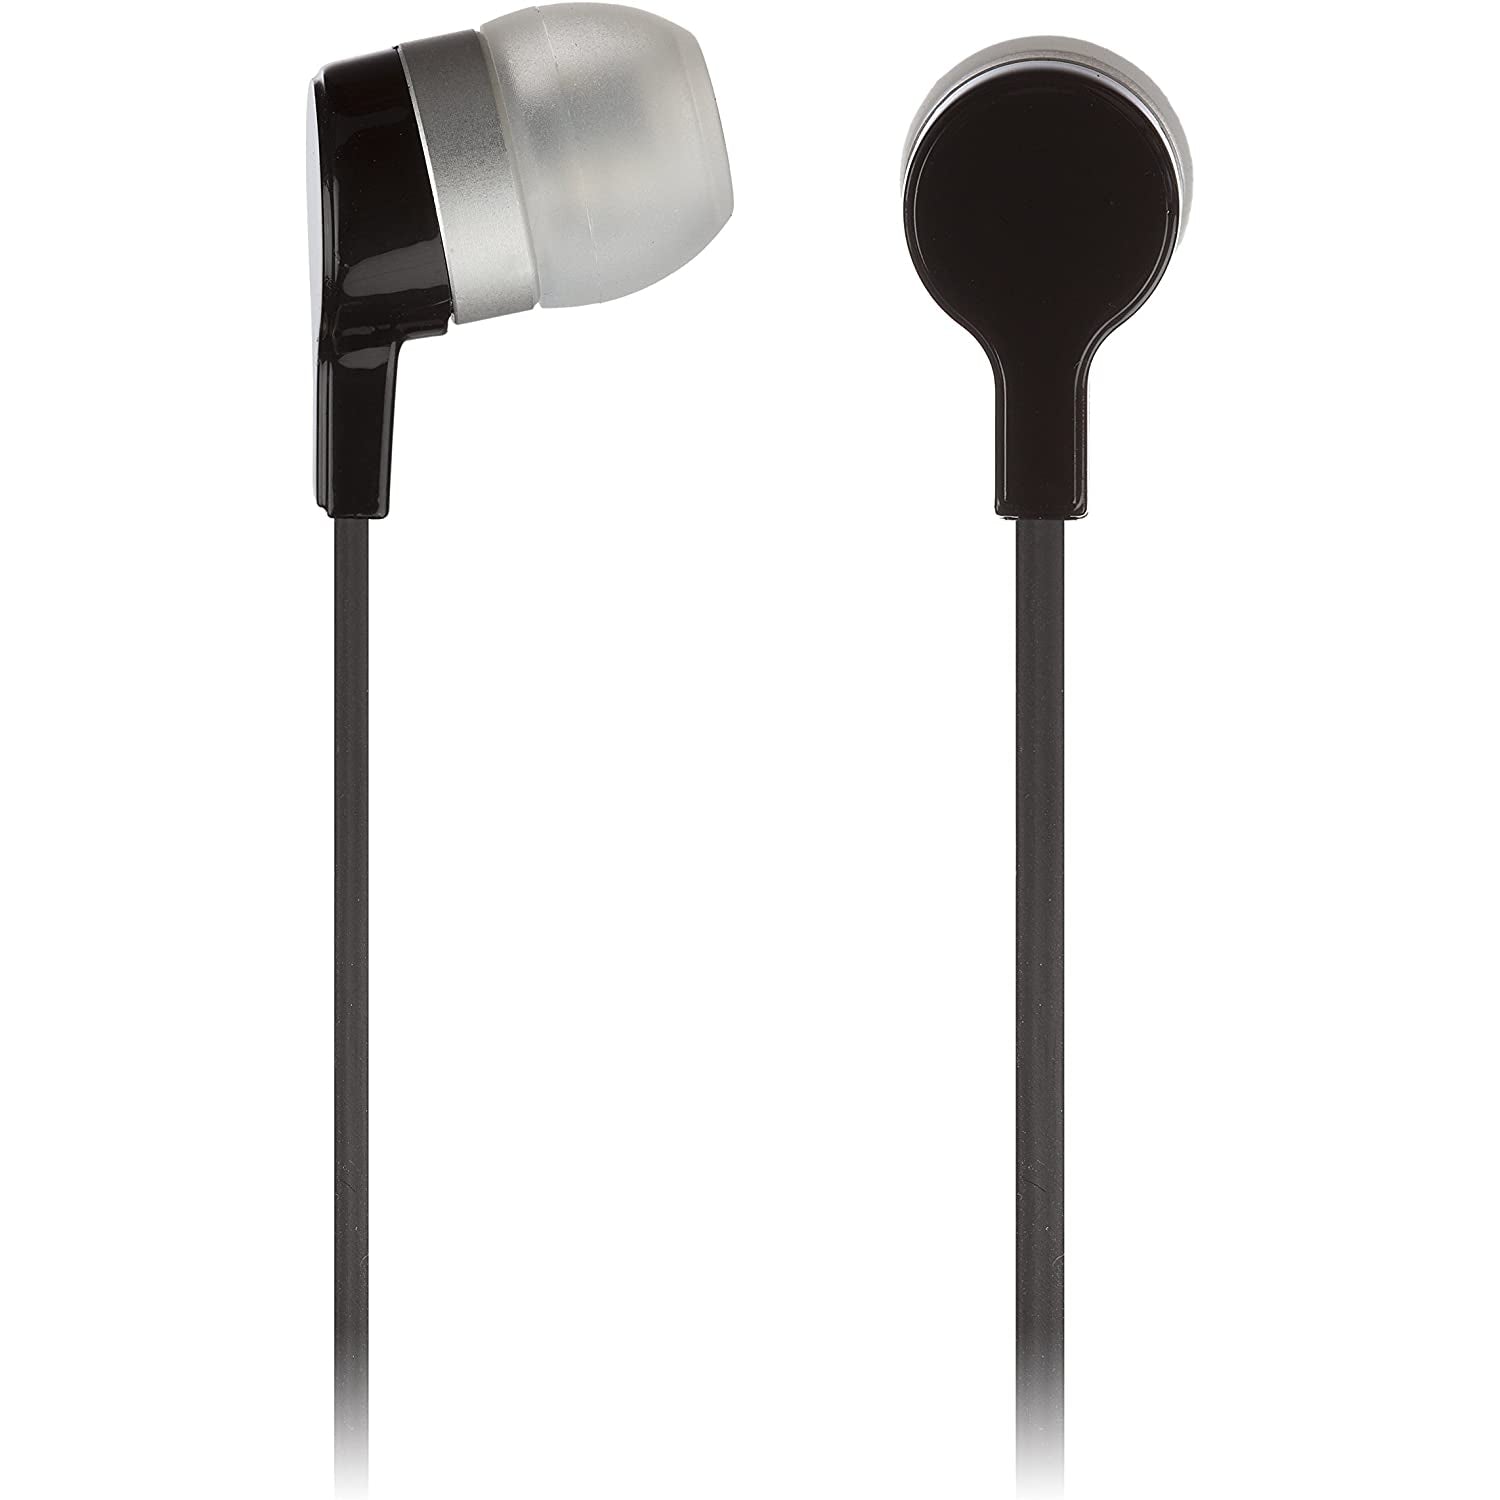 KitSound Mini In-Ear Headphones with In-Line Mic - Black - Refurbished Good